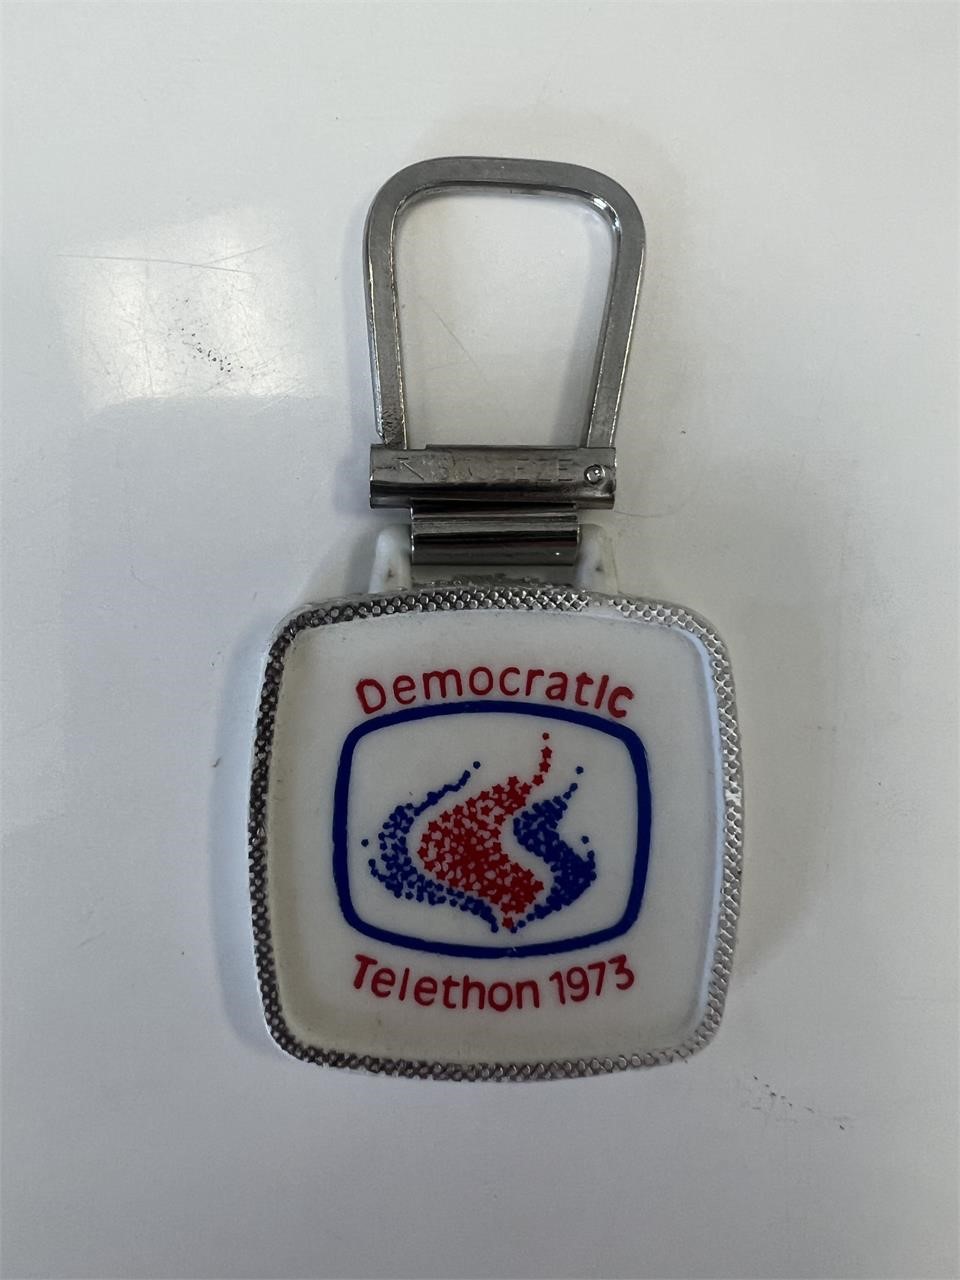 Democratic Telethon 1973 keychain